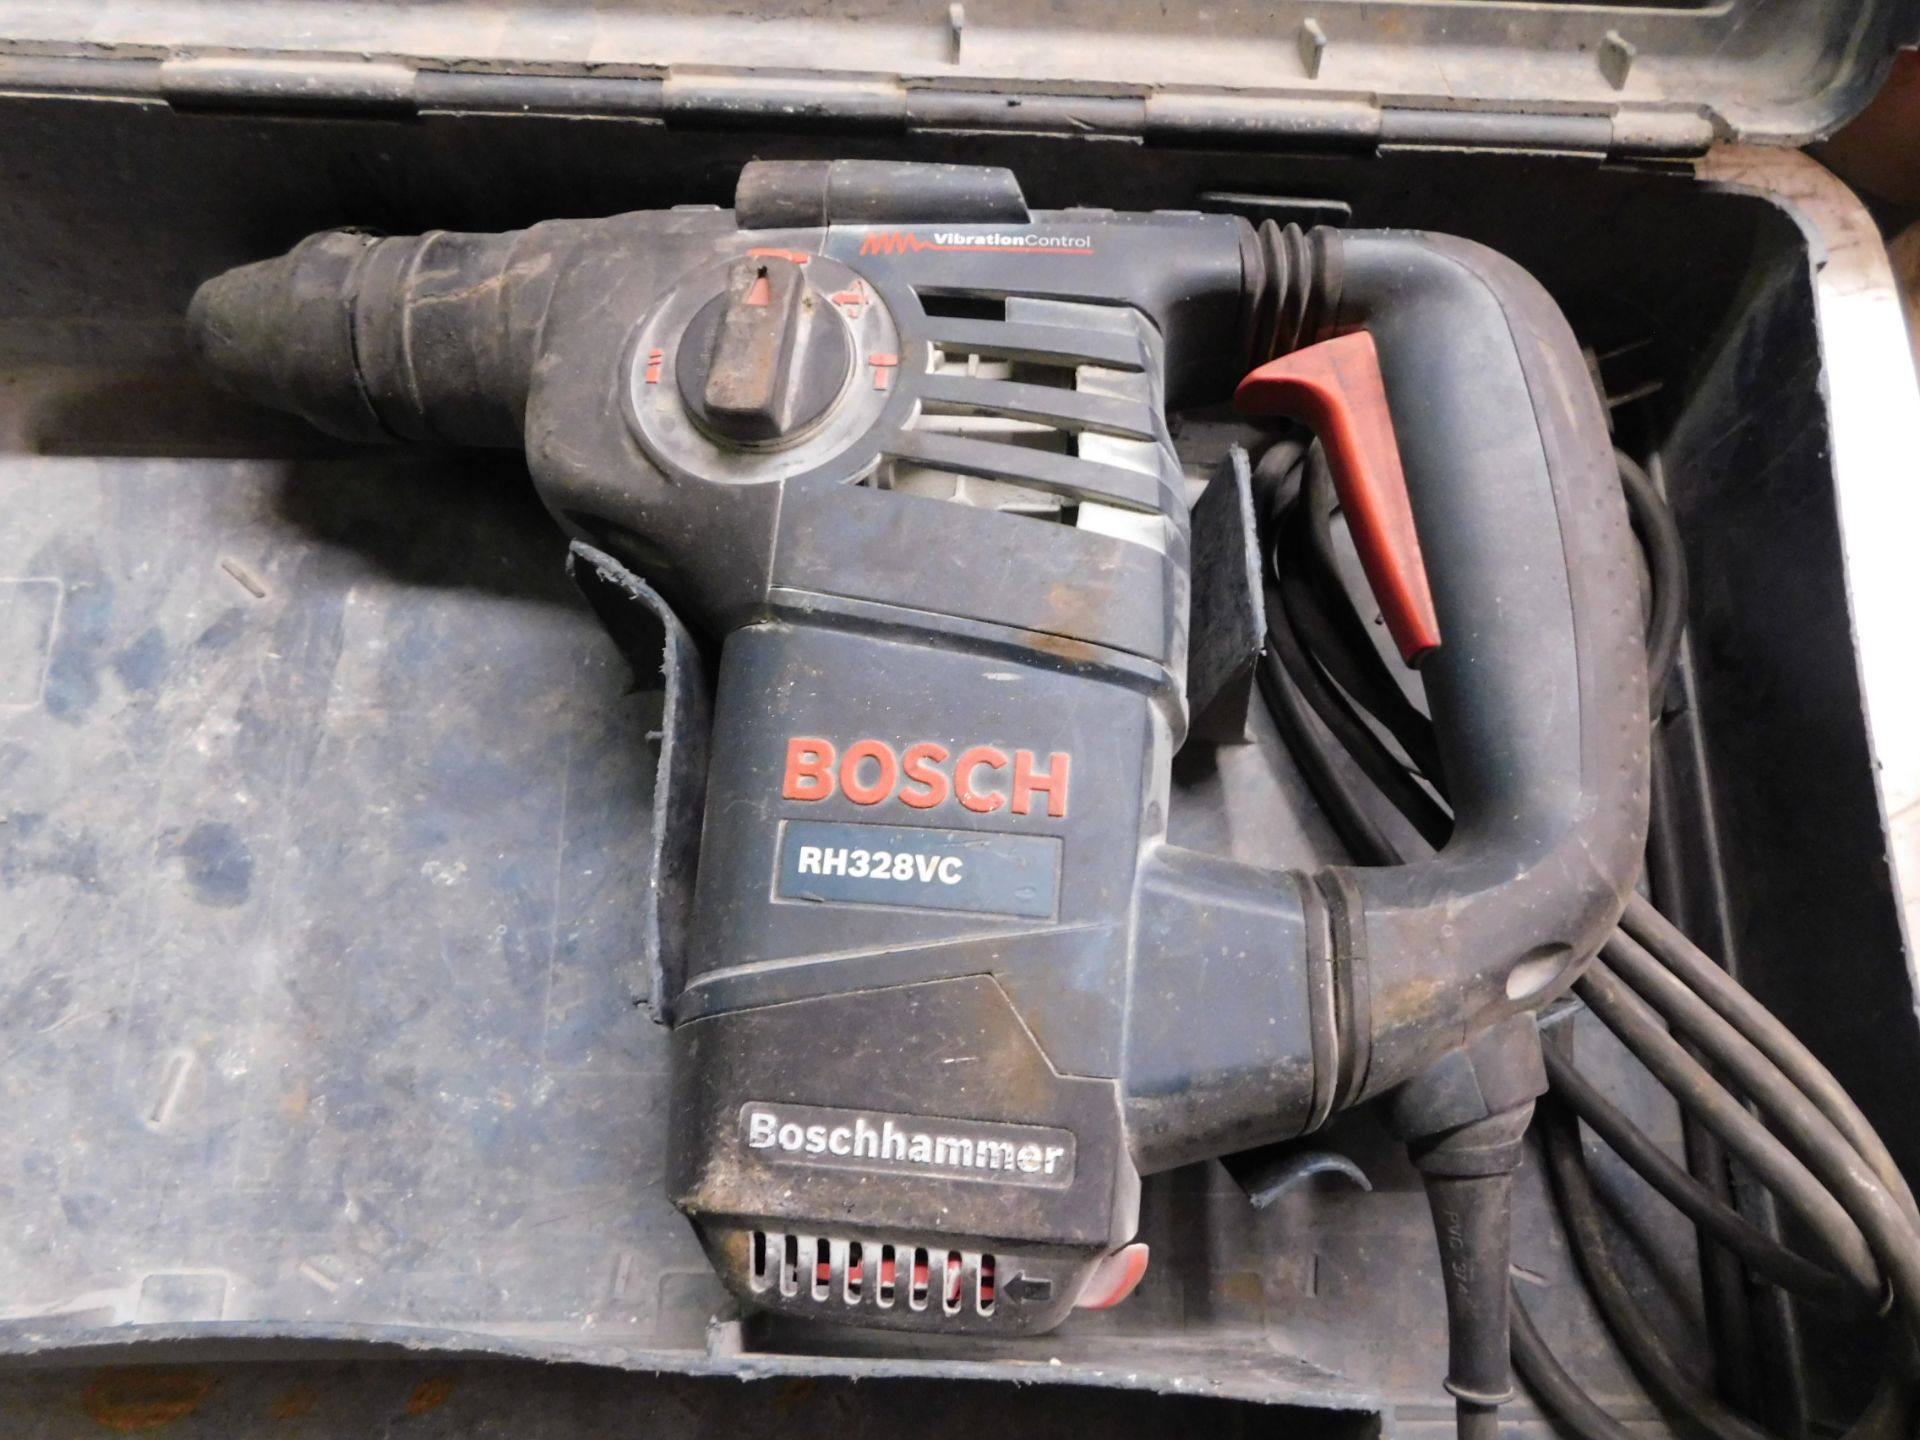 Bosch RH328VC Hammer Drill with Case